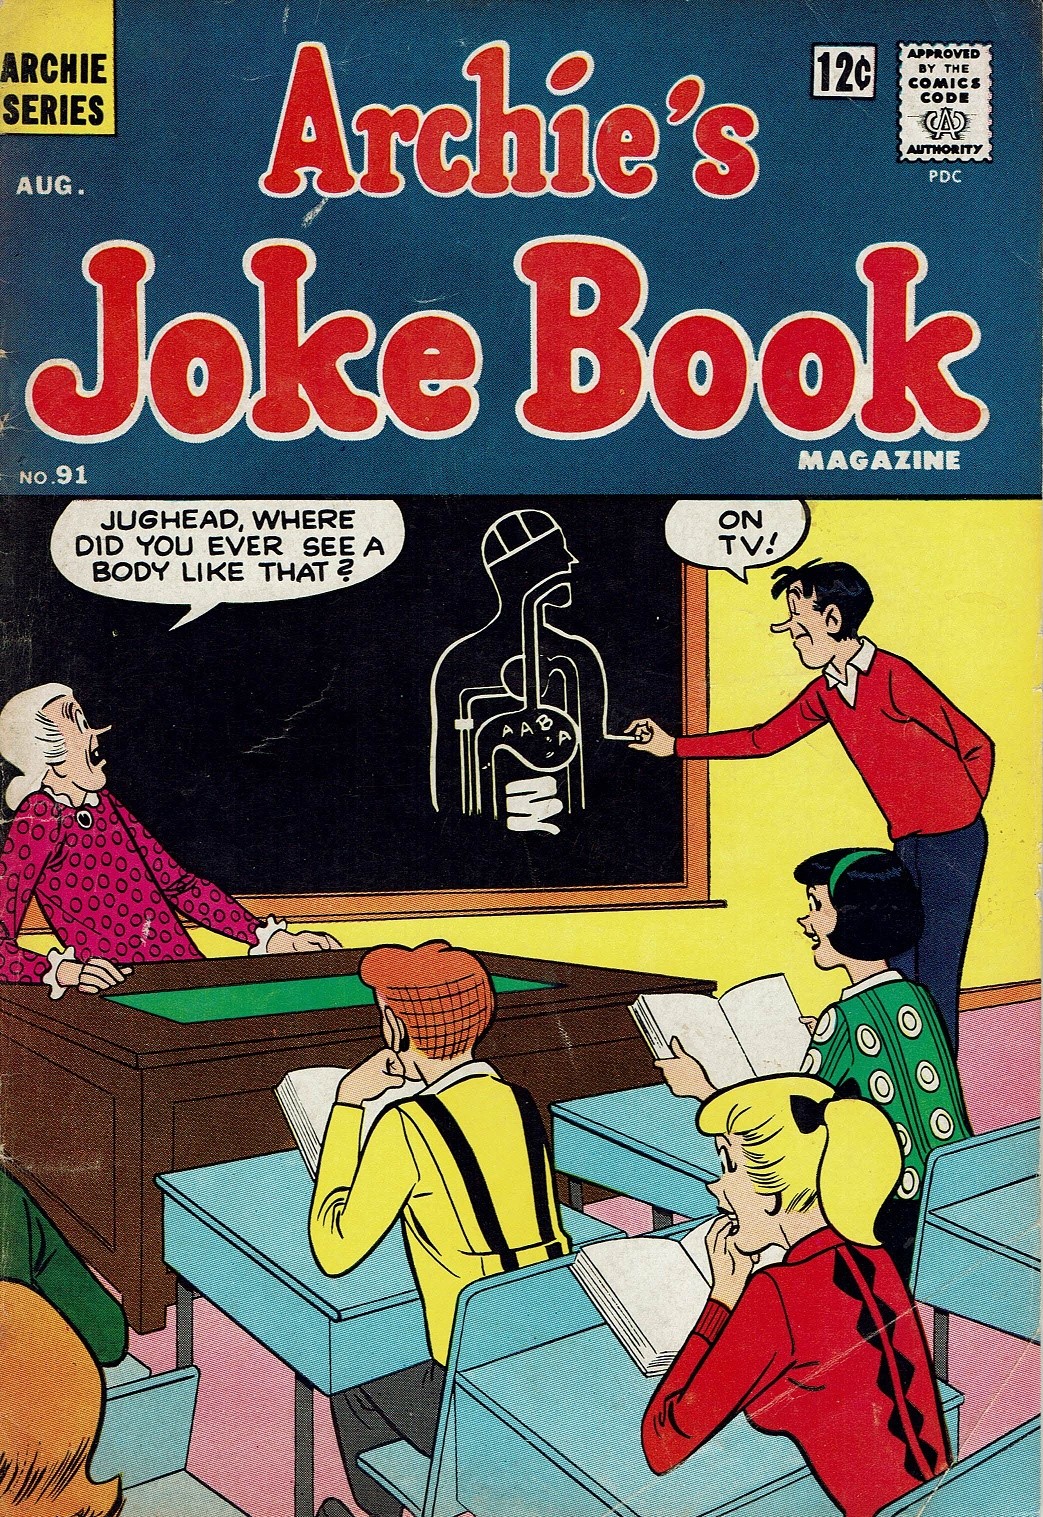 Archie's Joke Book Magazine issue 91 - Page 1